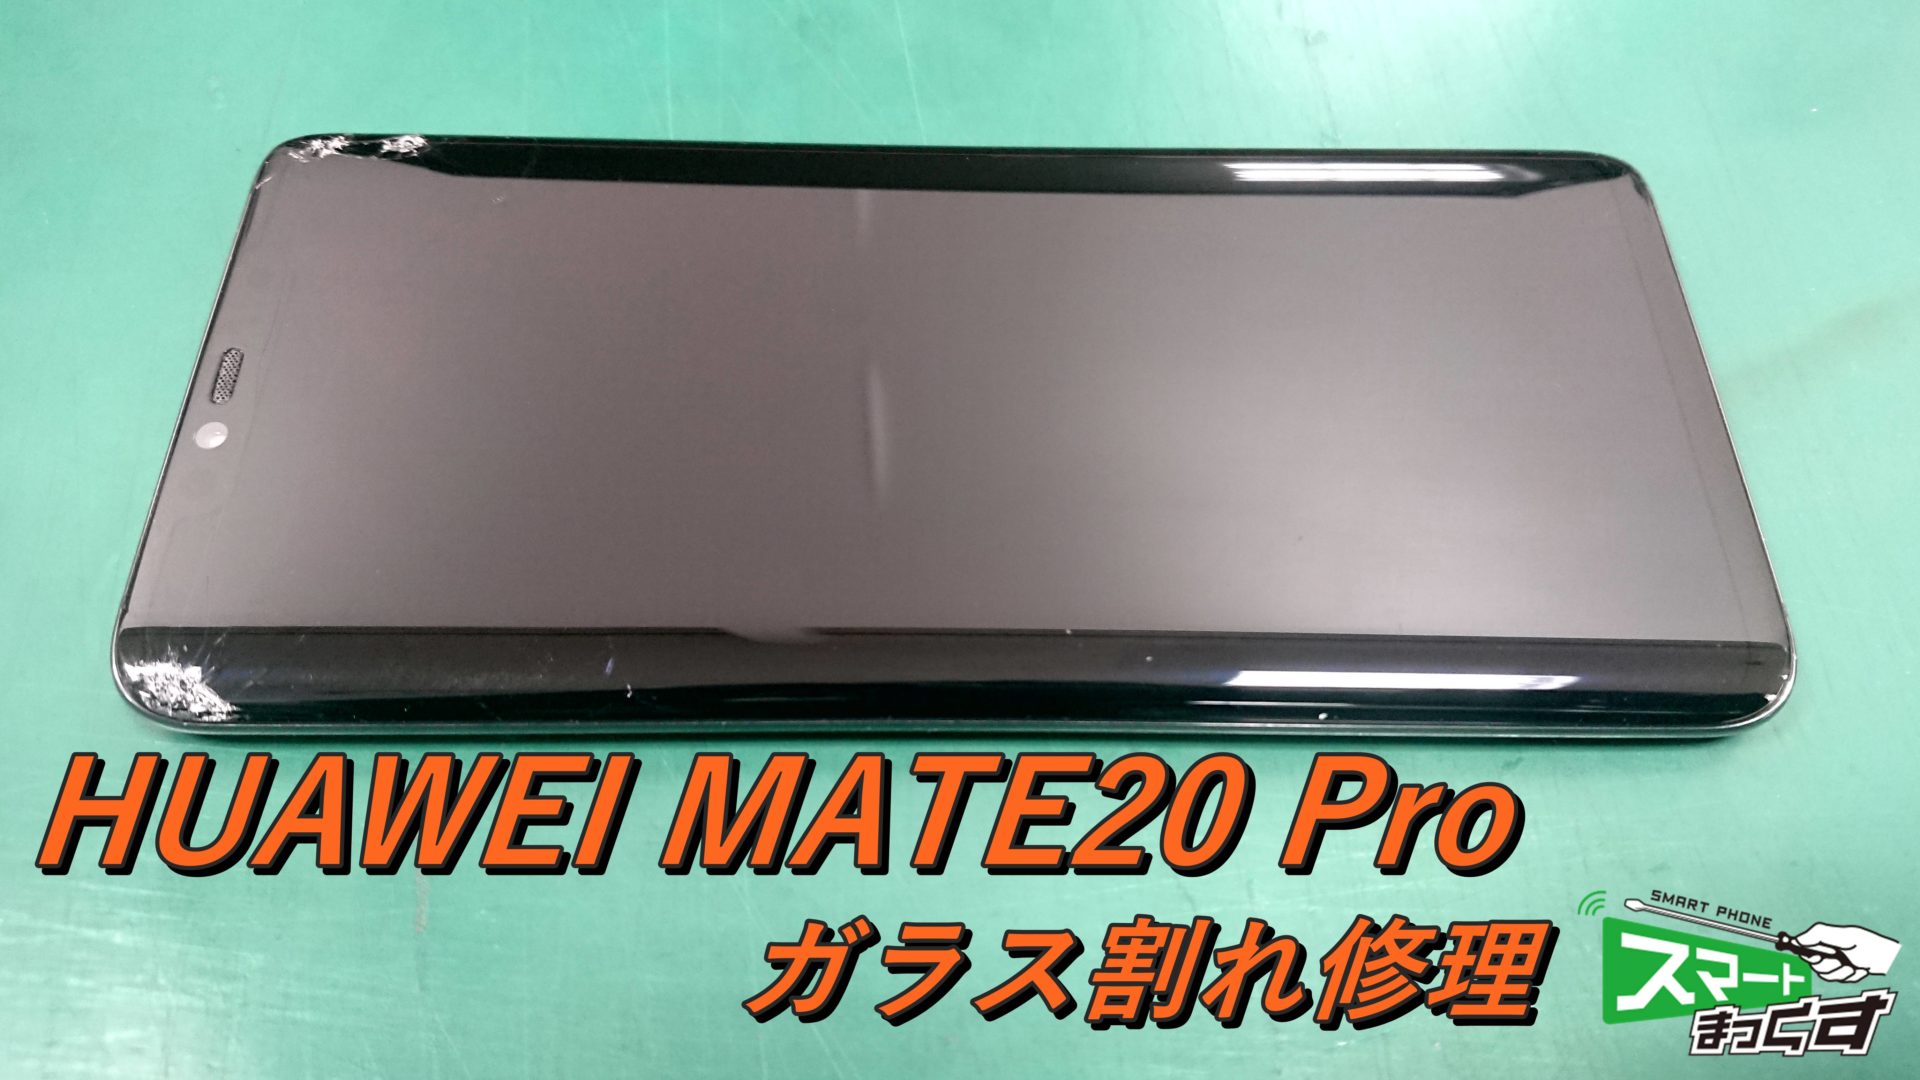 HUAWEI MATE 20 Pro ガラス割れ交換修理！ - 銀座ファイブ店